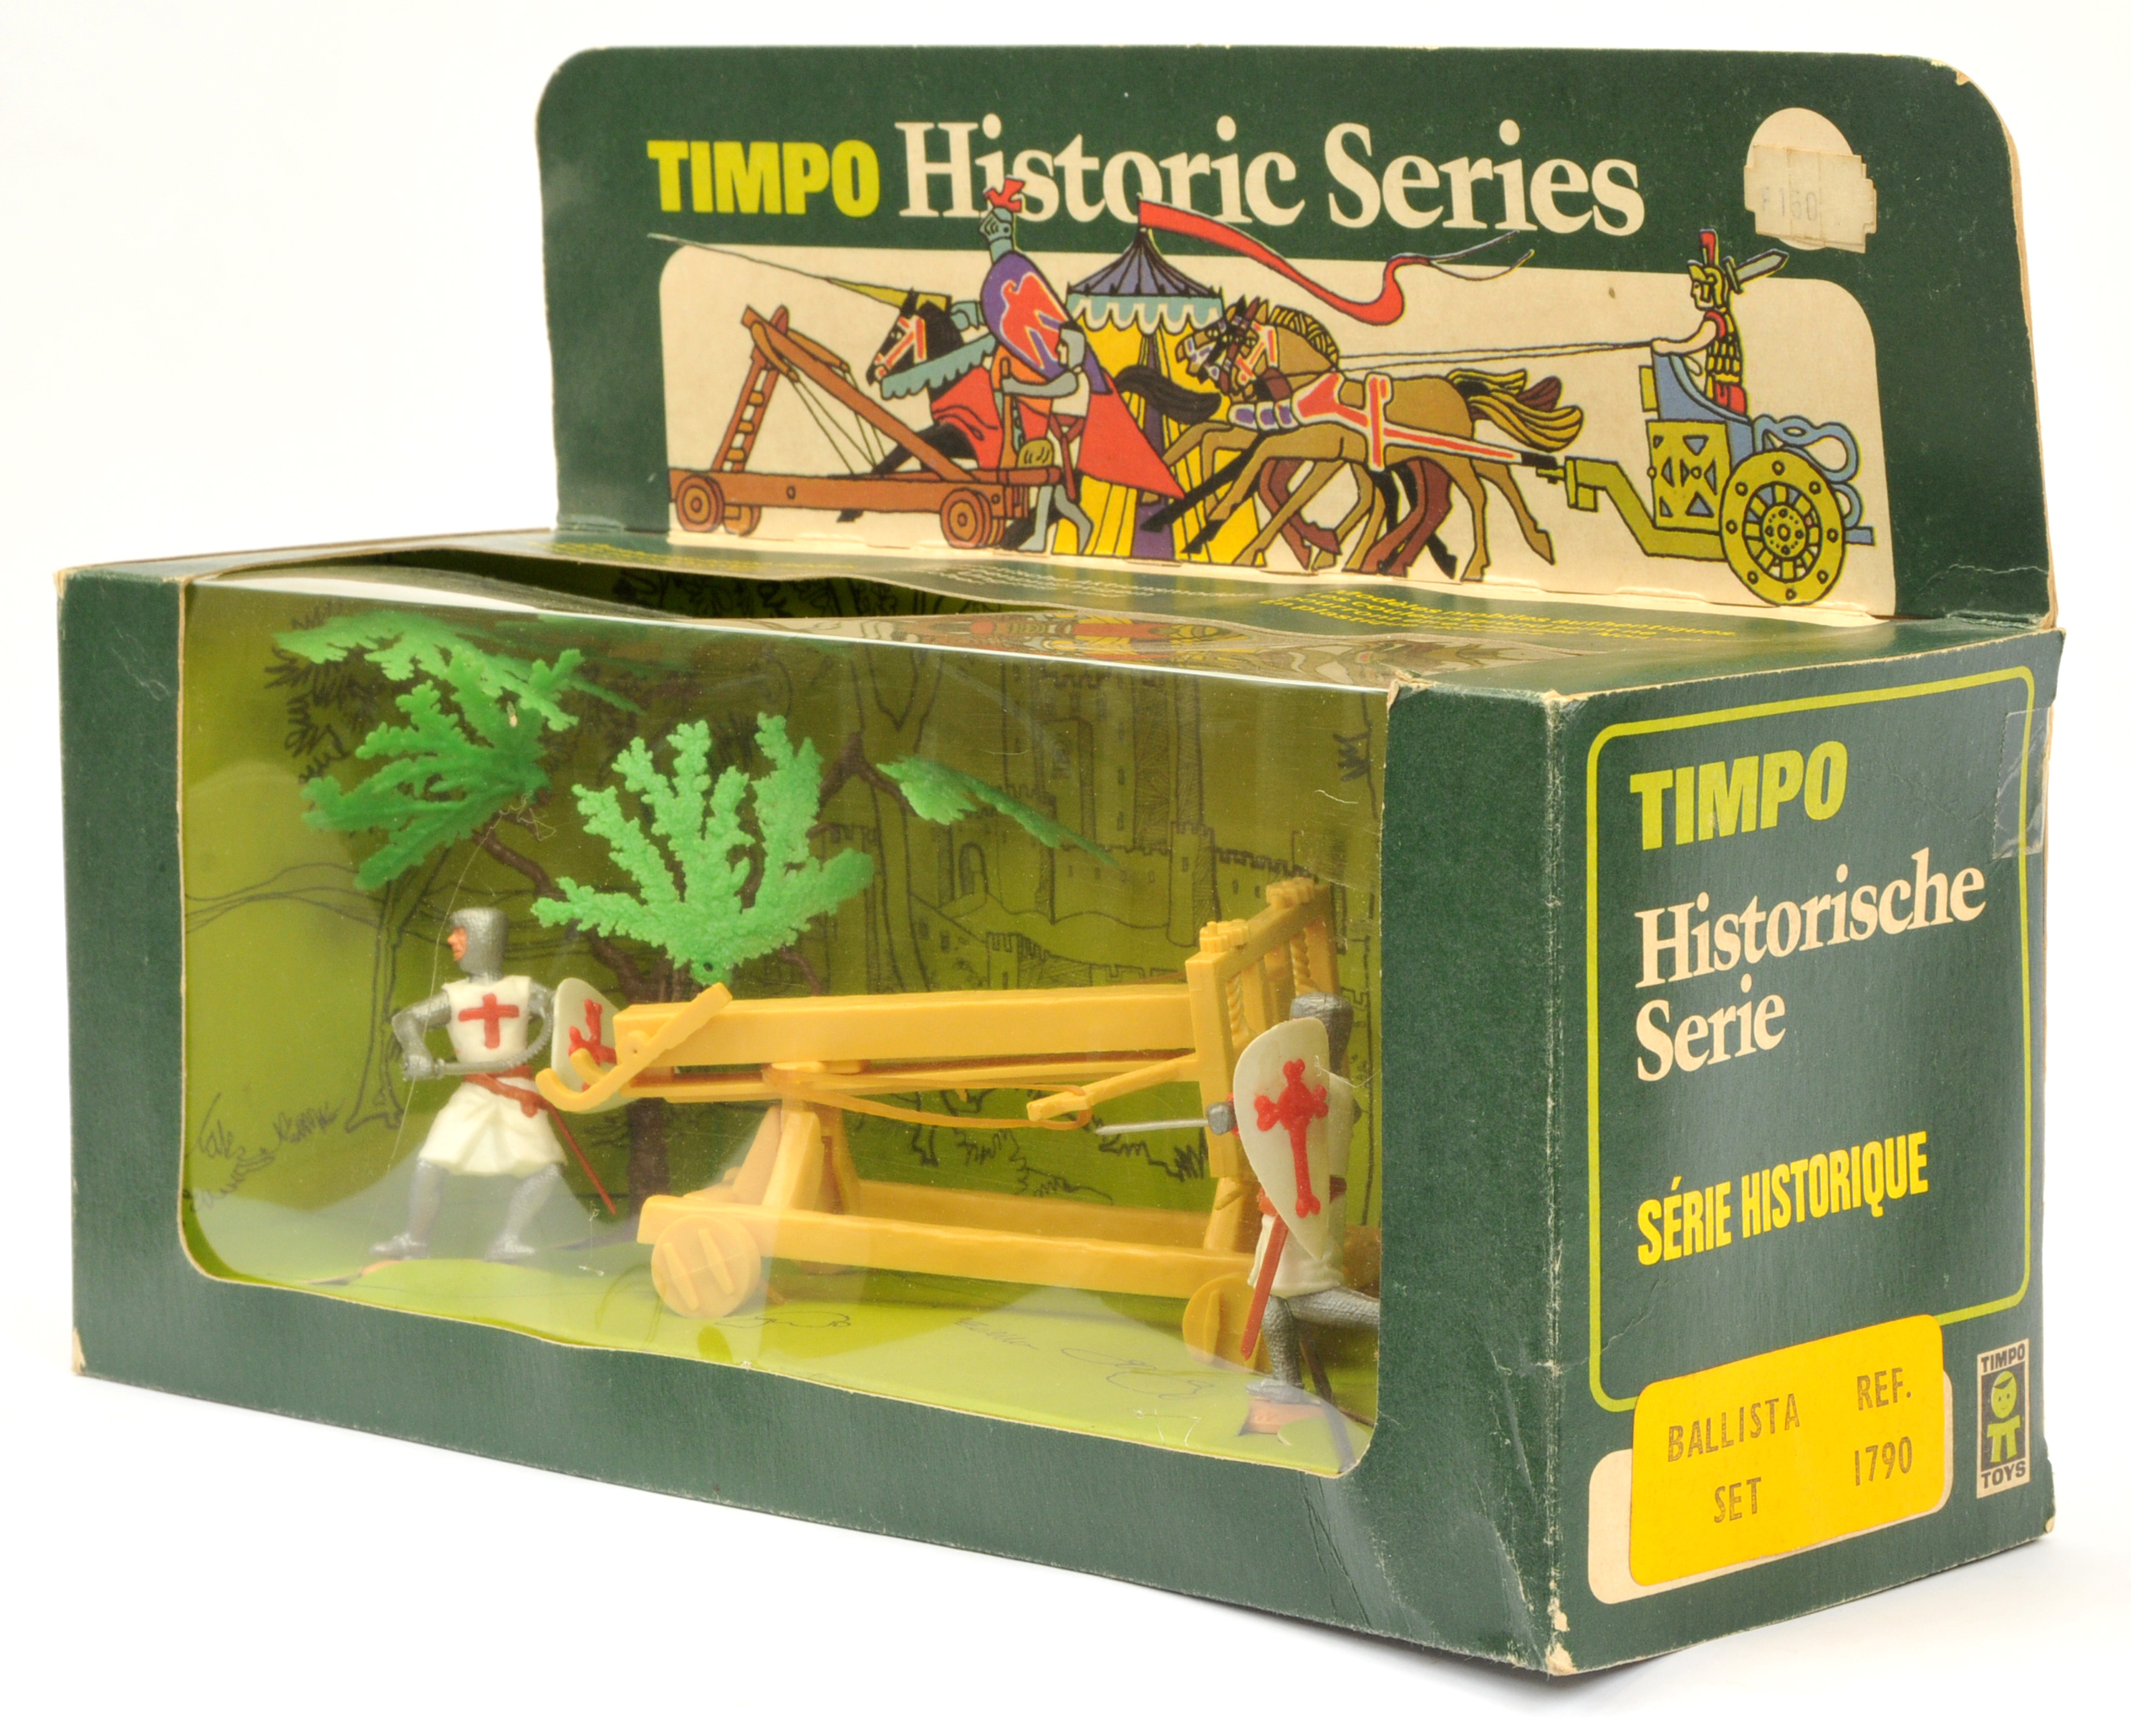 Timpo Historic Series - Set Ref. No. 1790 'Ballista Set', Boxed - Image 2 of 2